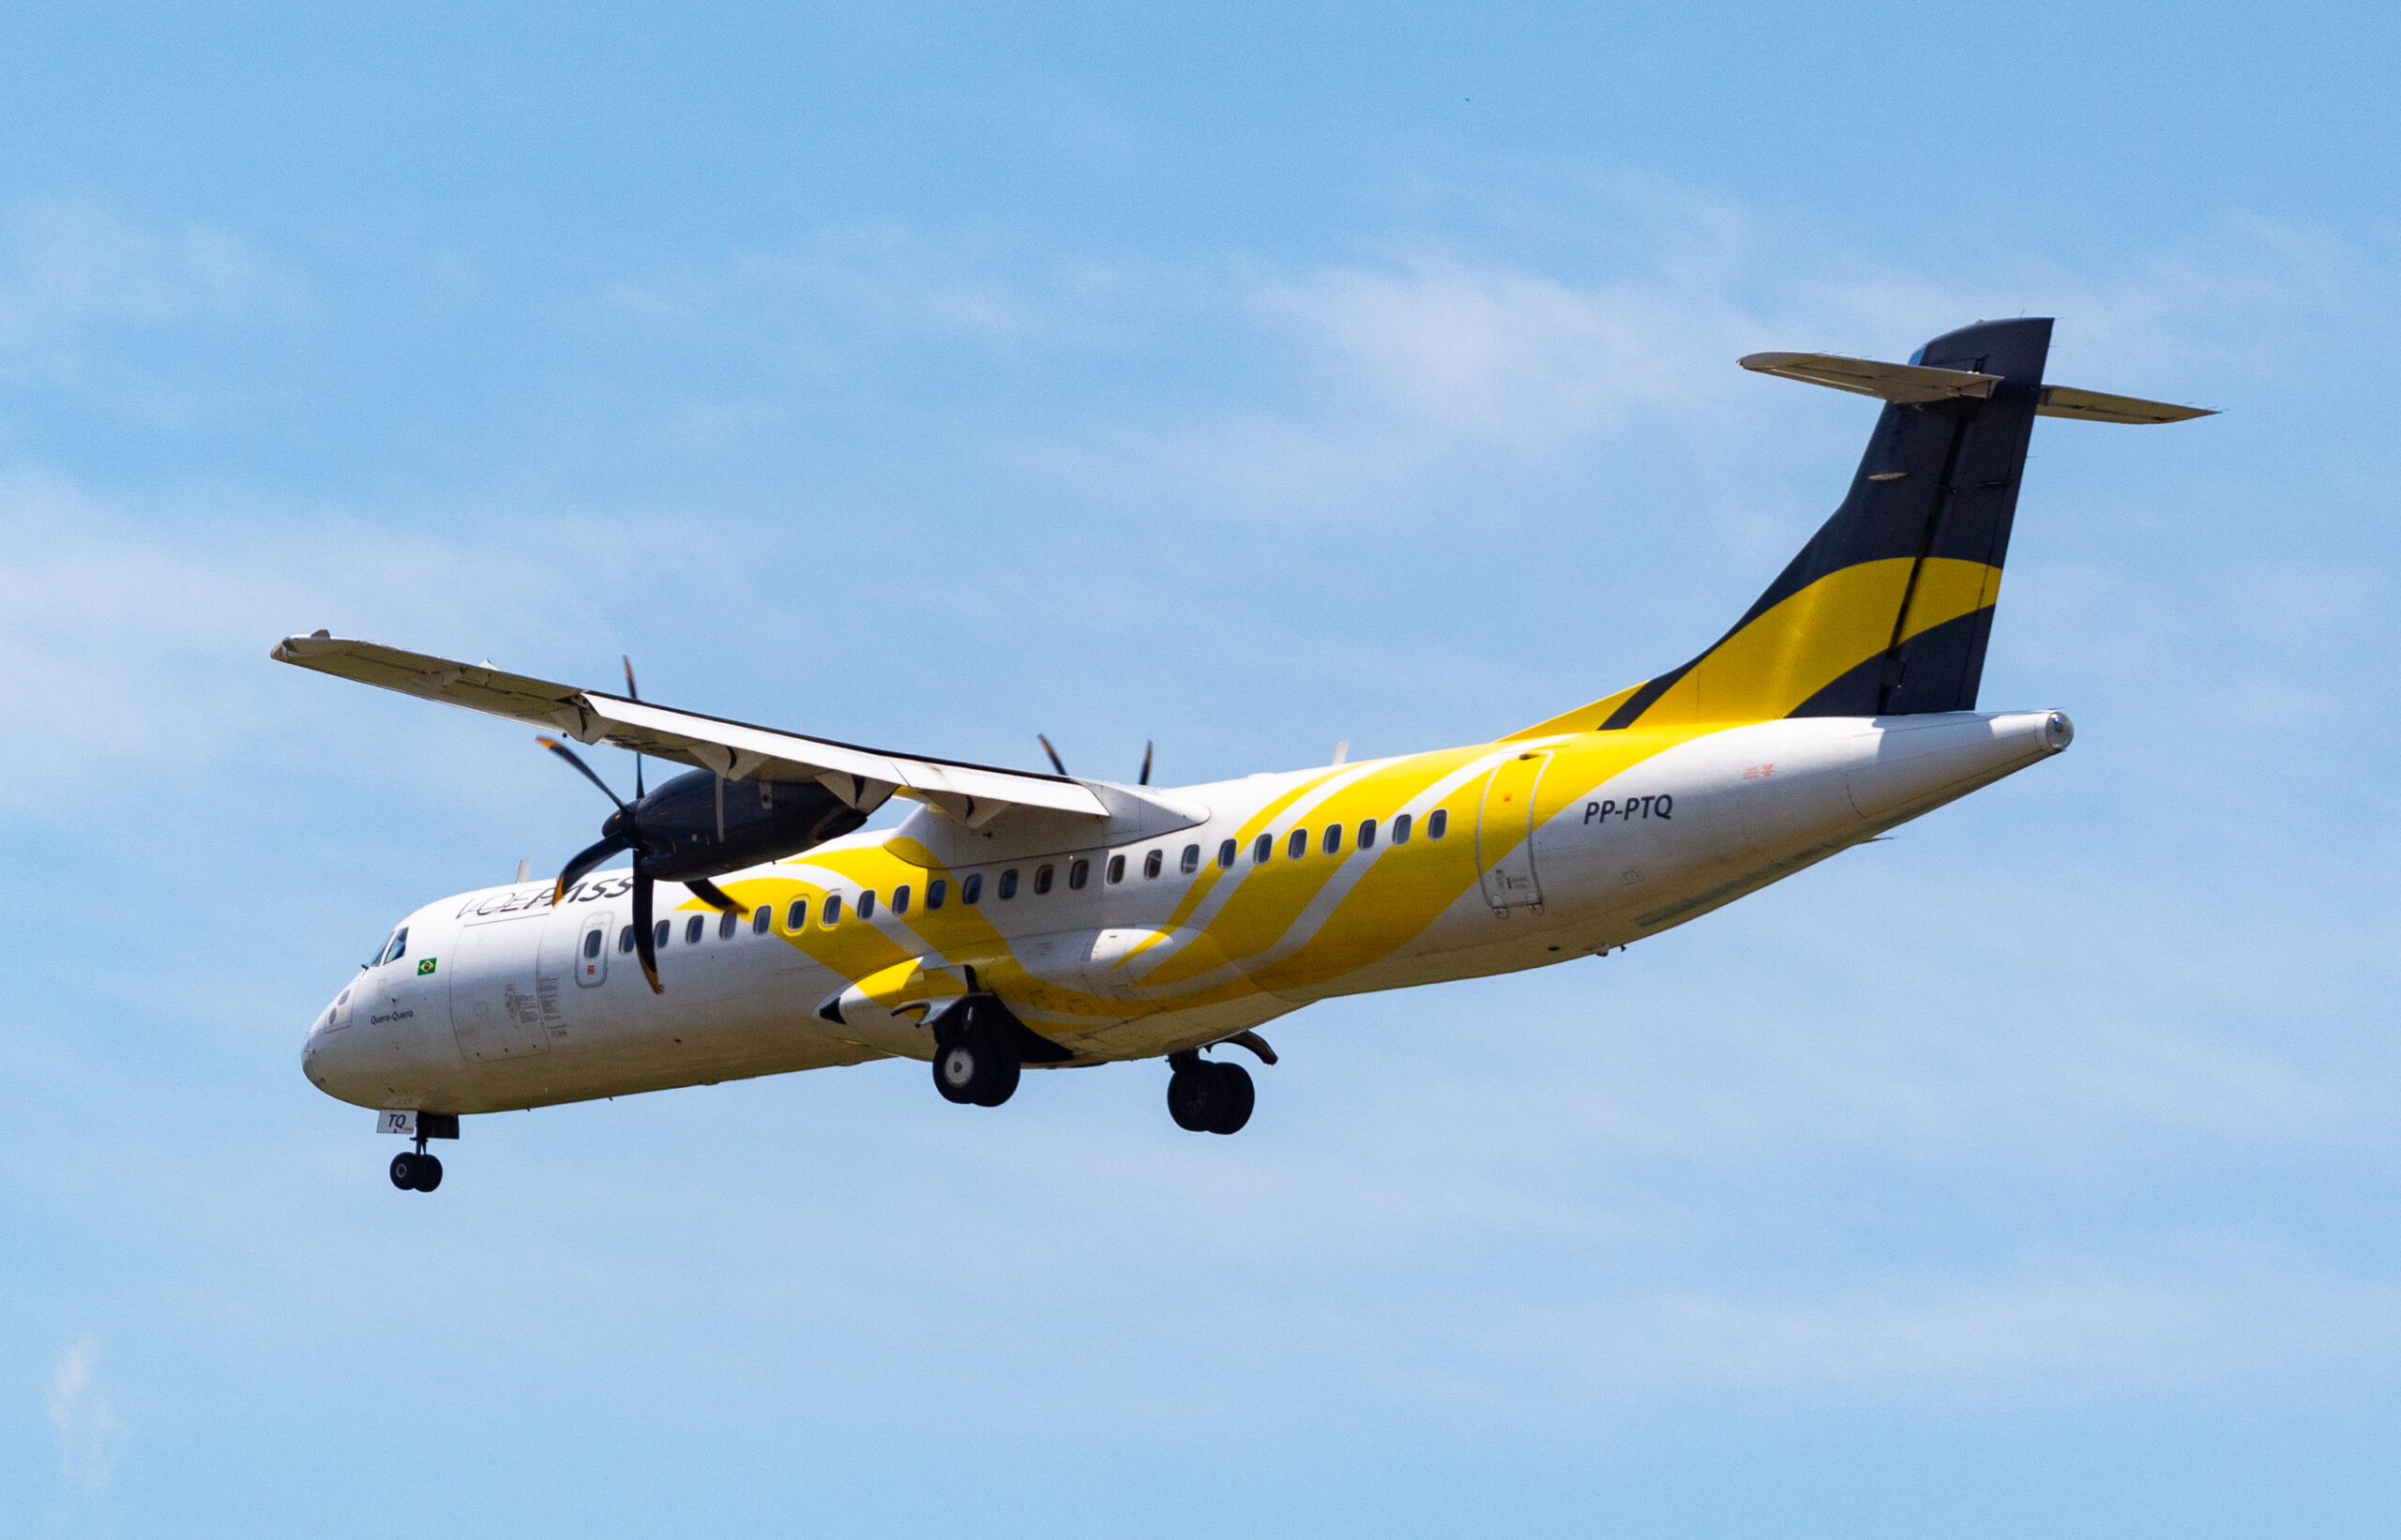 PP-PTQ – ATR 72-212A – Voepass - Blog do Spotter